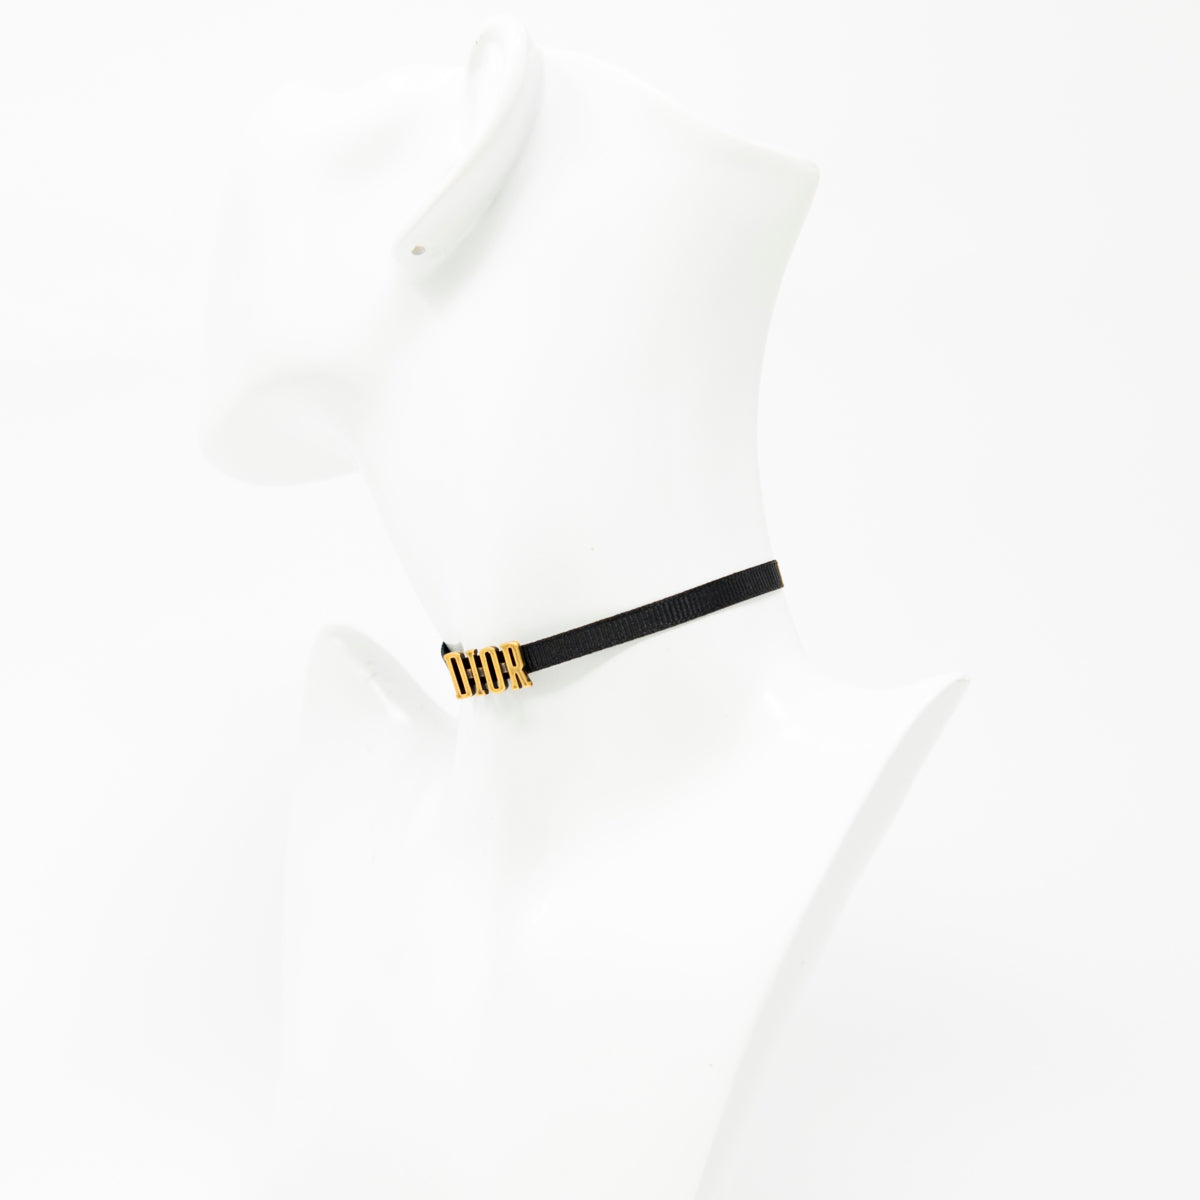 Dior Black Ribbon Logo Choker